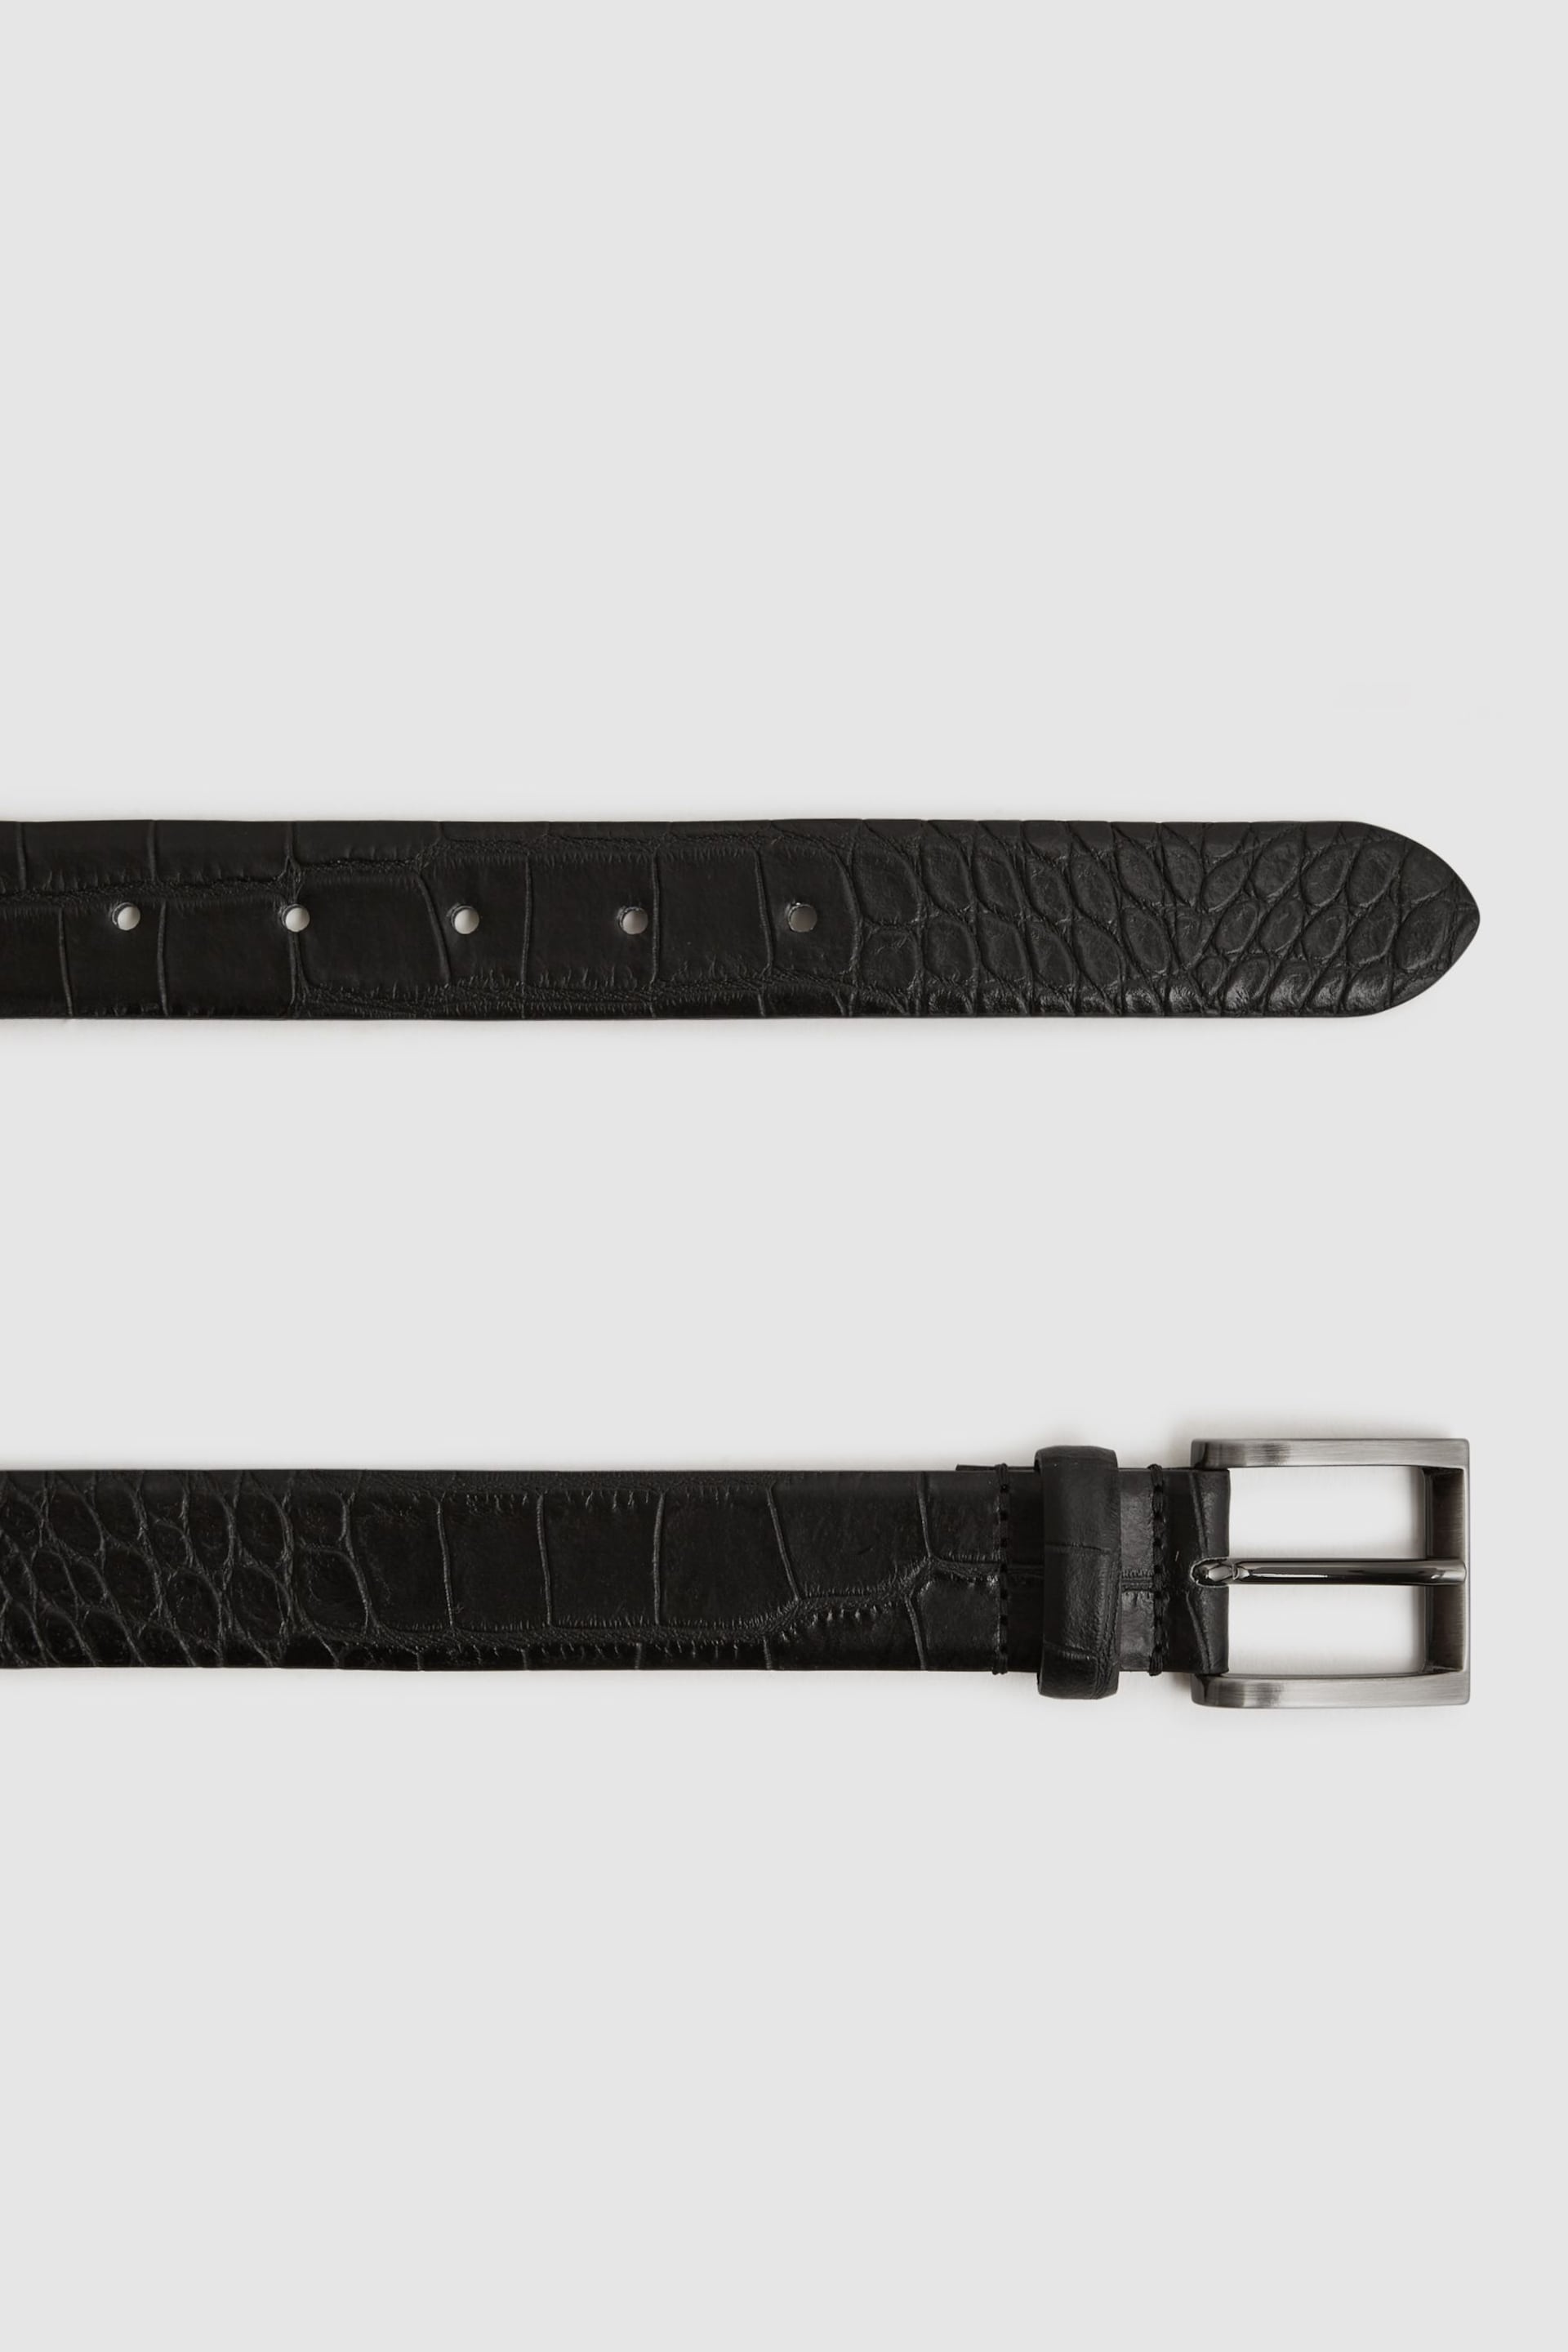 Reiss Black/Gunmetal Albany Leather Belt - Image 3 of 4